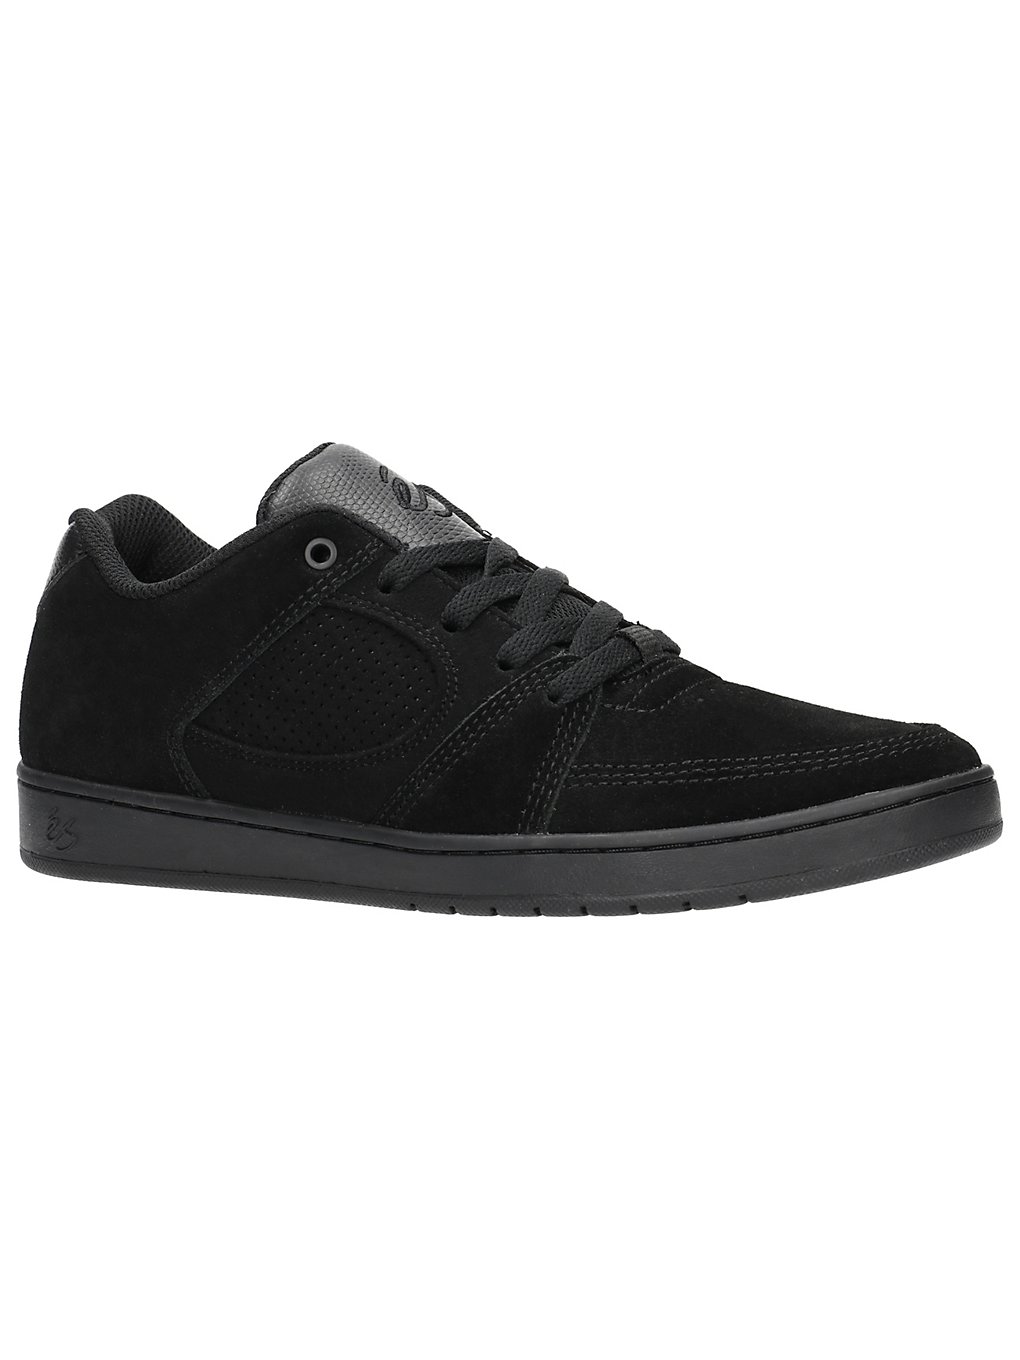 Es Accel Slim Skate Shoes noir